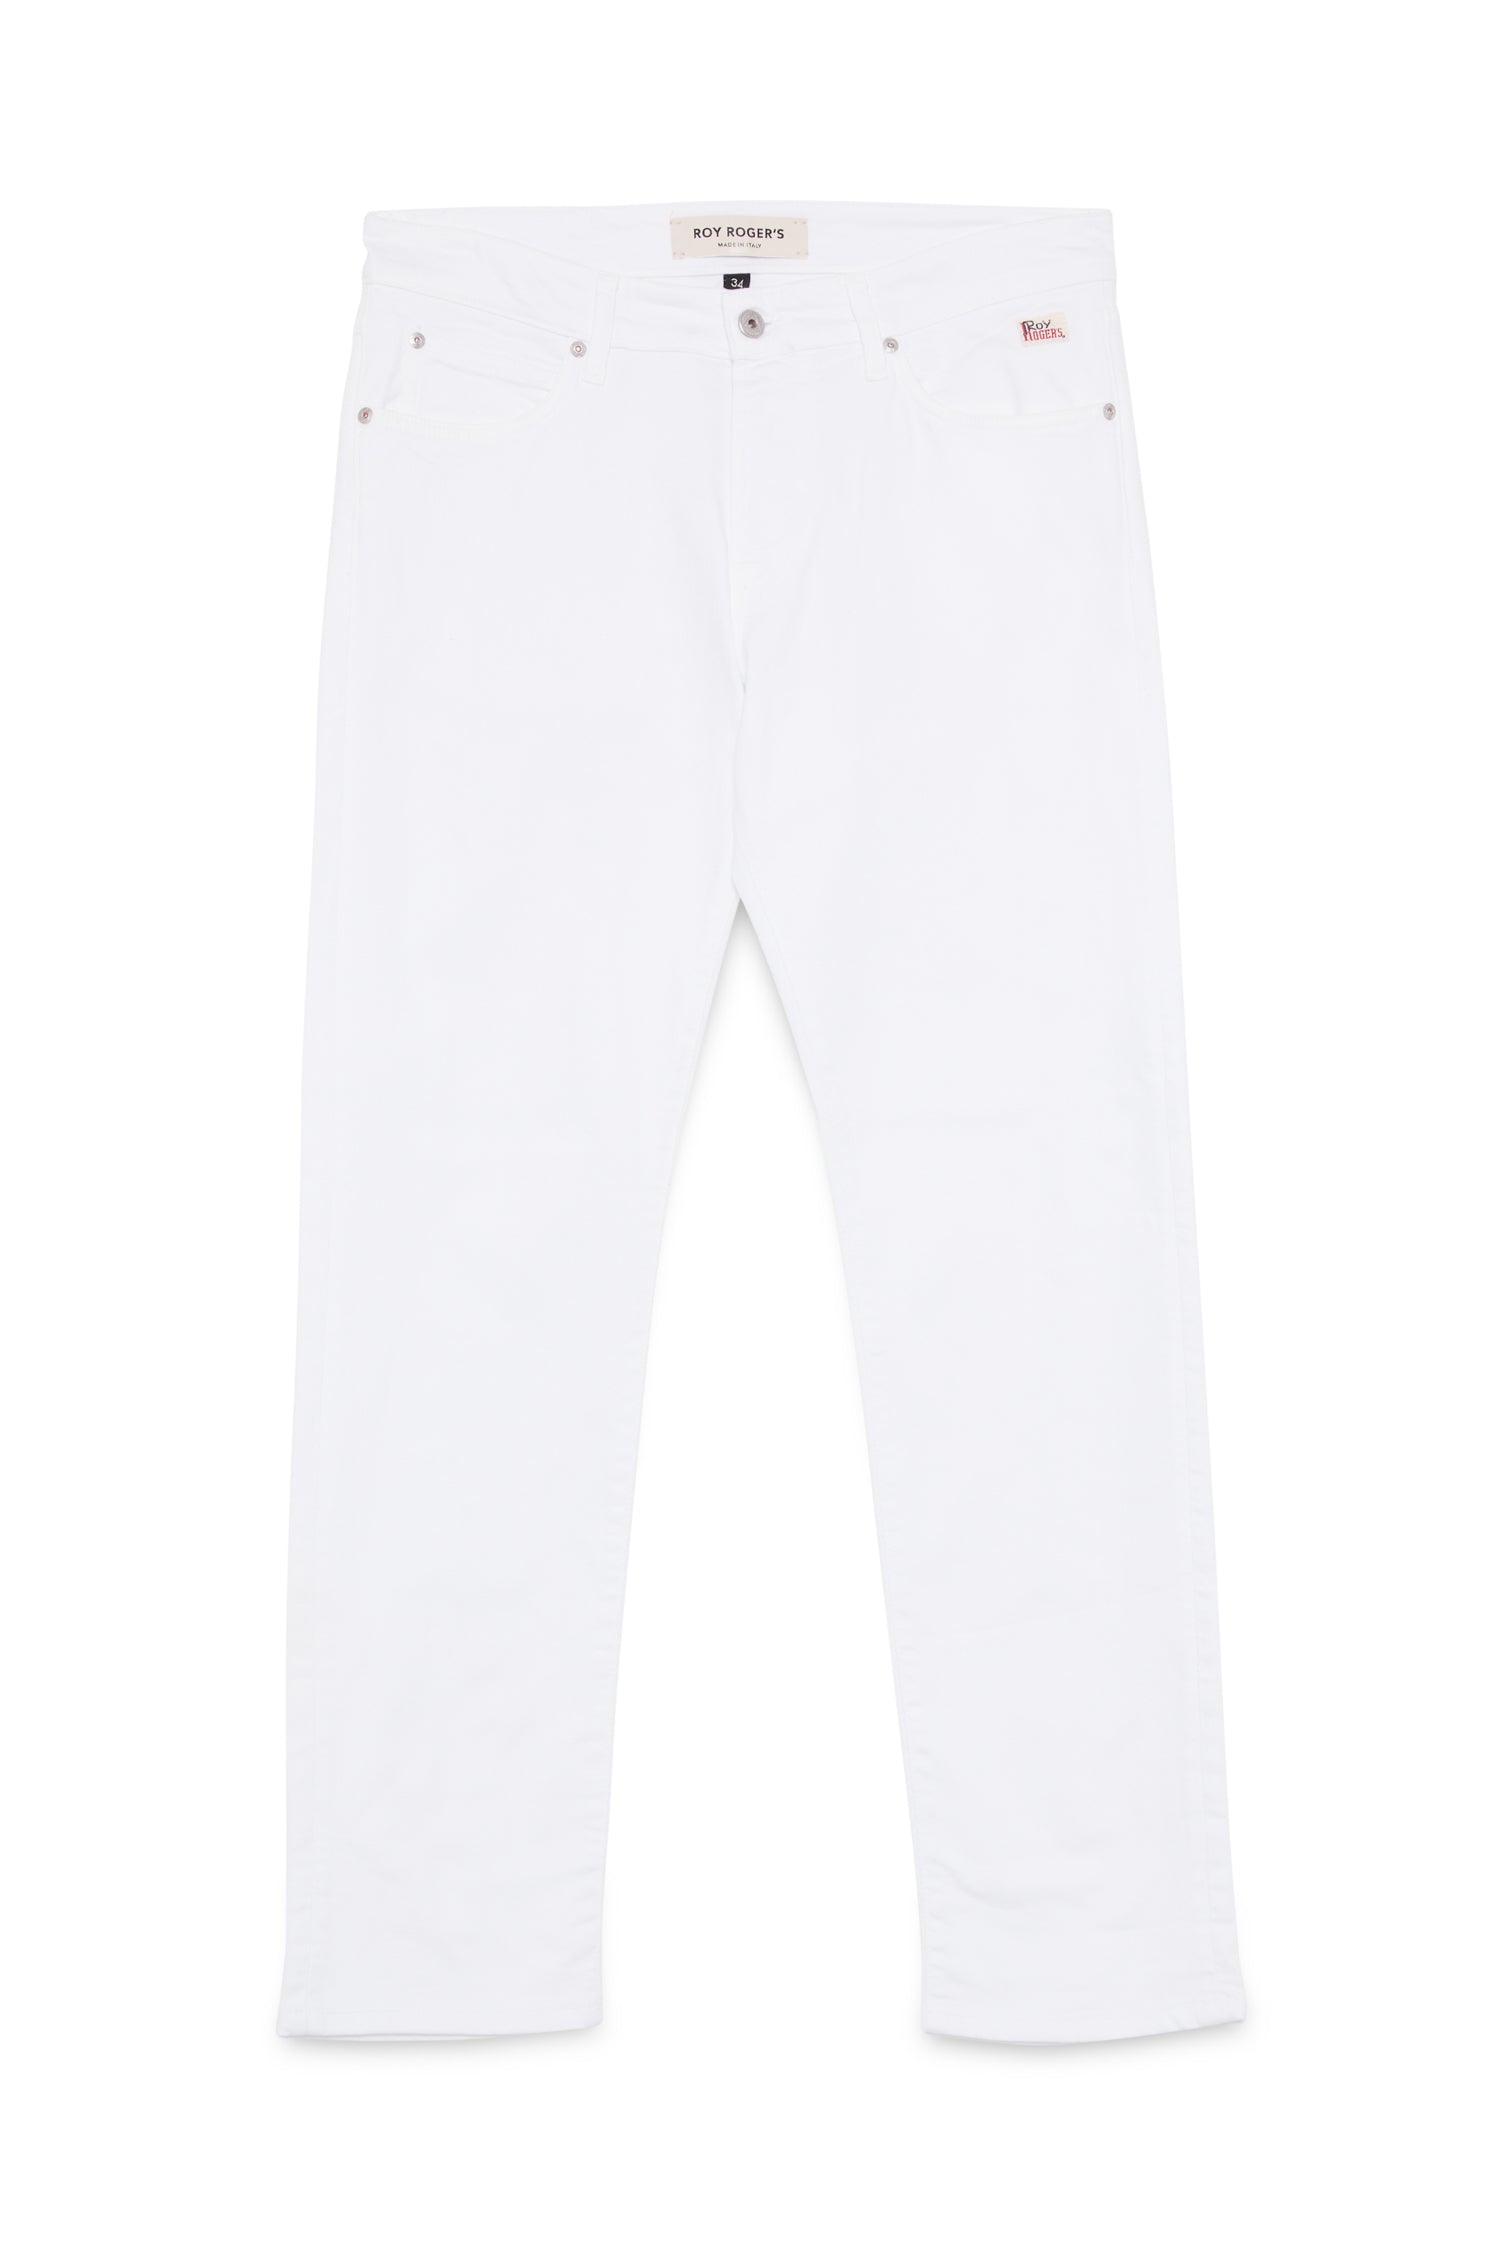 Jeans ROY ROGER'S 5 tasche bull denim elasticizz
Bianco